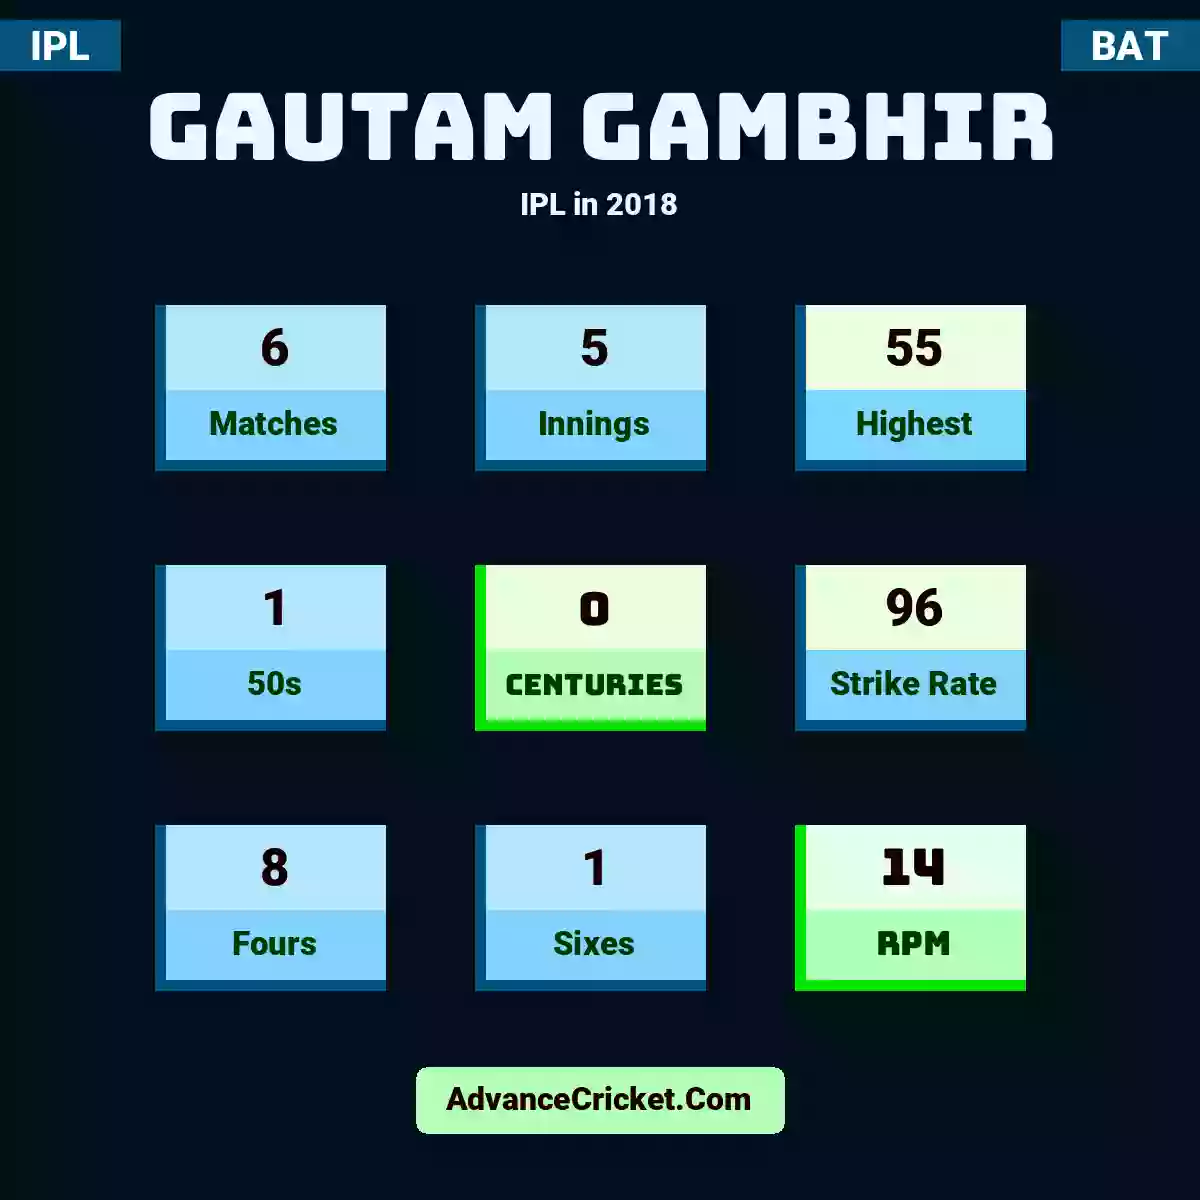 Gautam Gambhir IPL  in 2018, Gautam Gambhir played 6 matches, scored 55 runs as highest, 1 half-centuries, and 0 centuries, with a strike rate of 96. G.Gambhir hit 8 fours and 1 sixes, with an RPM of 14.